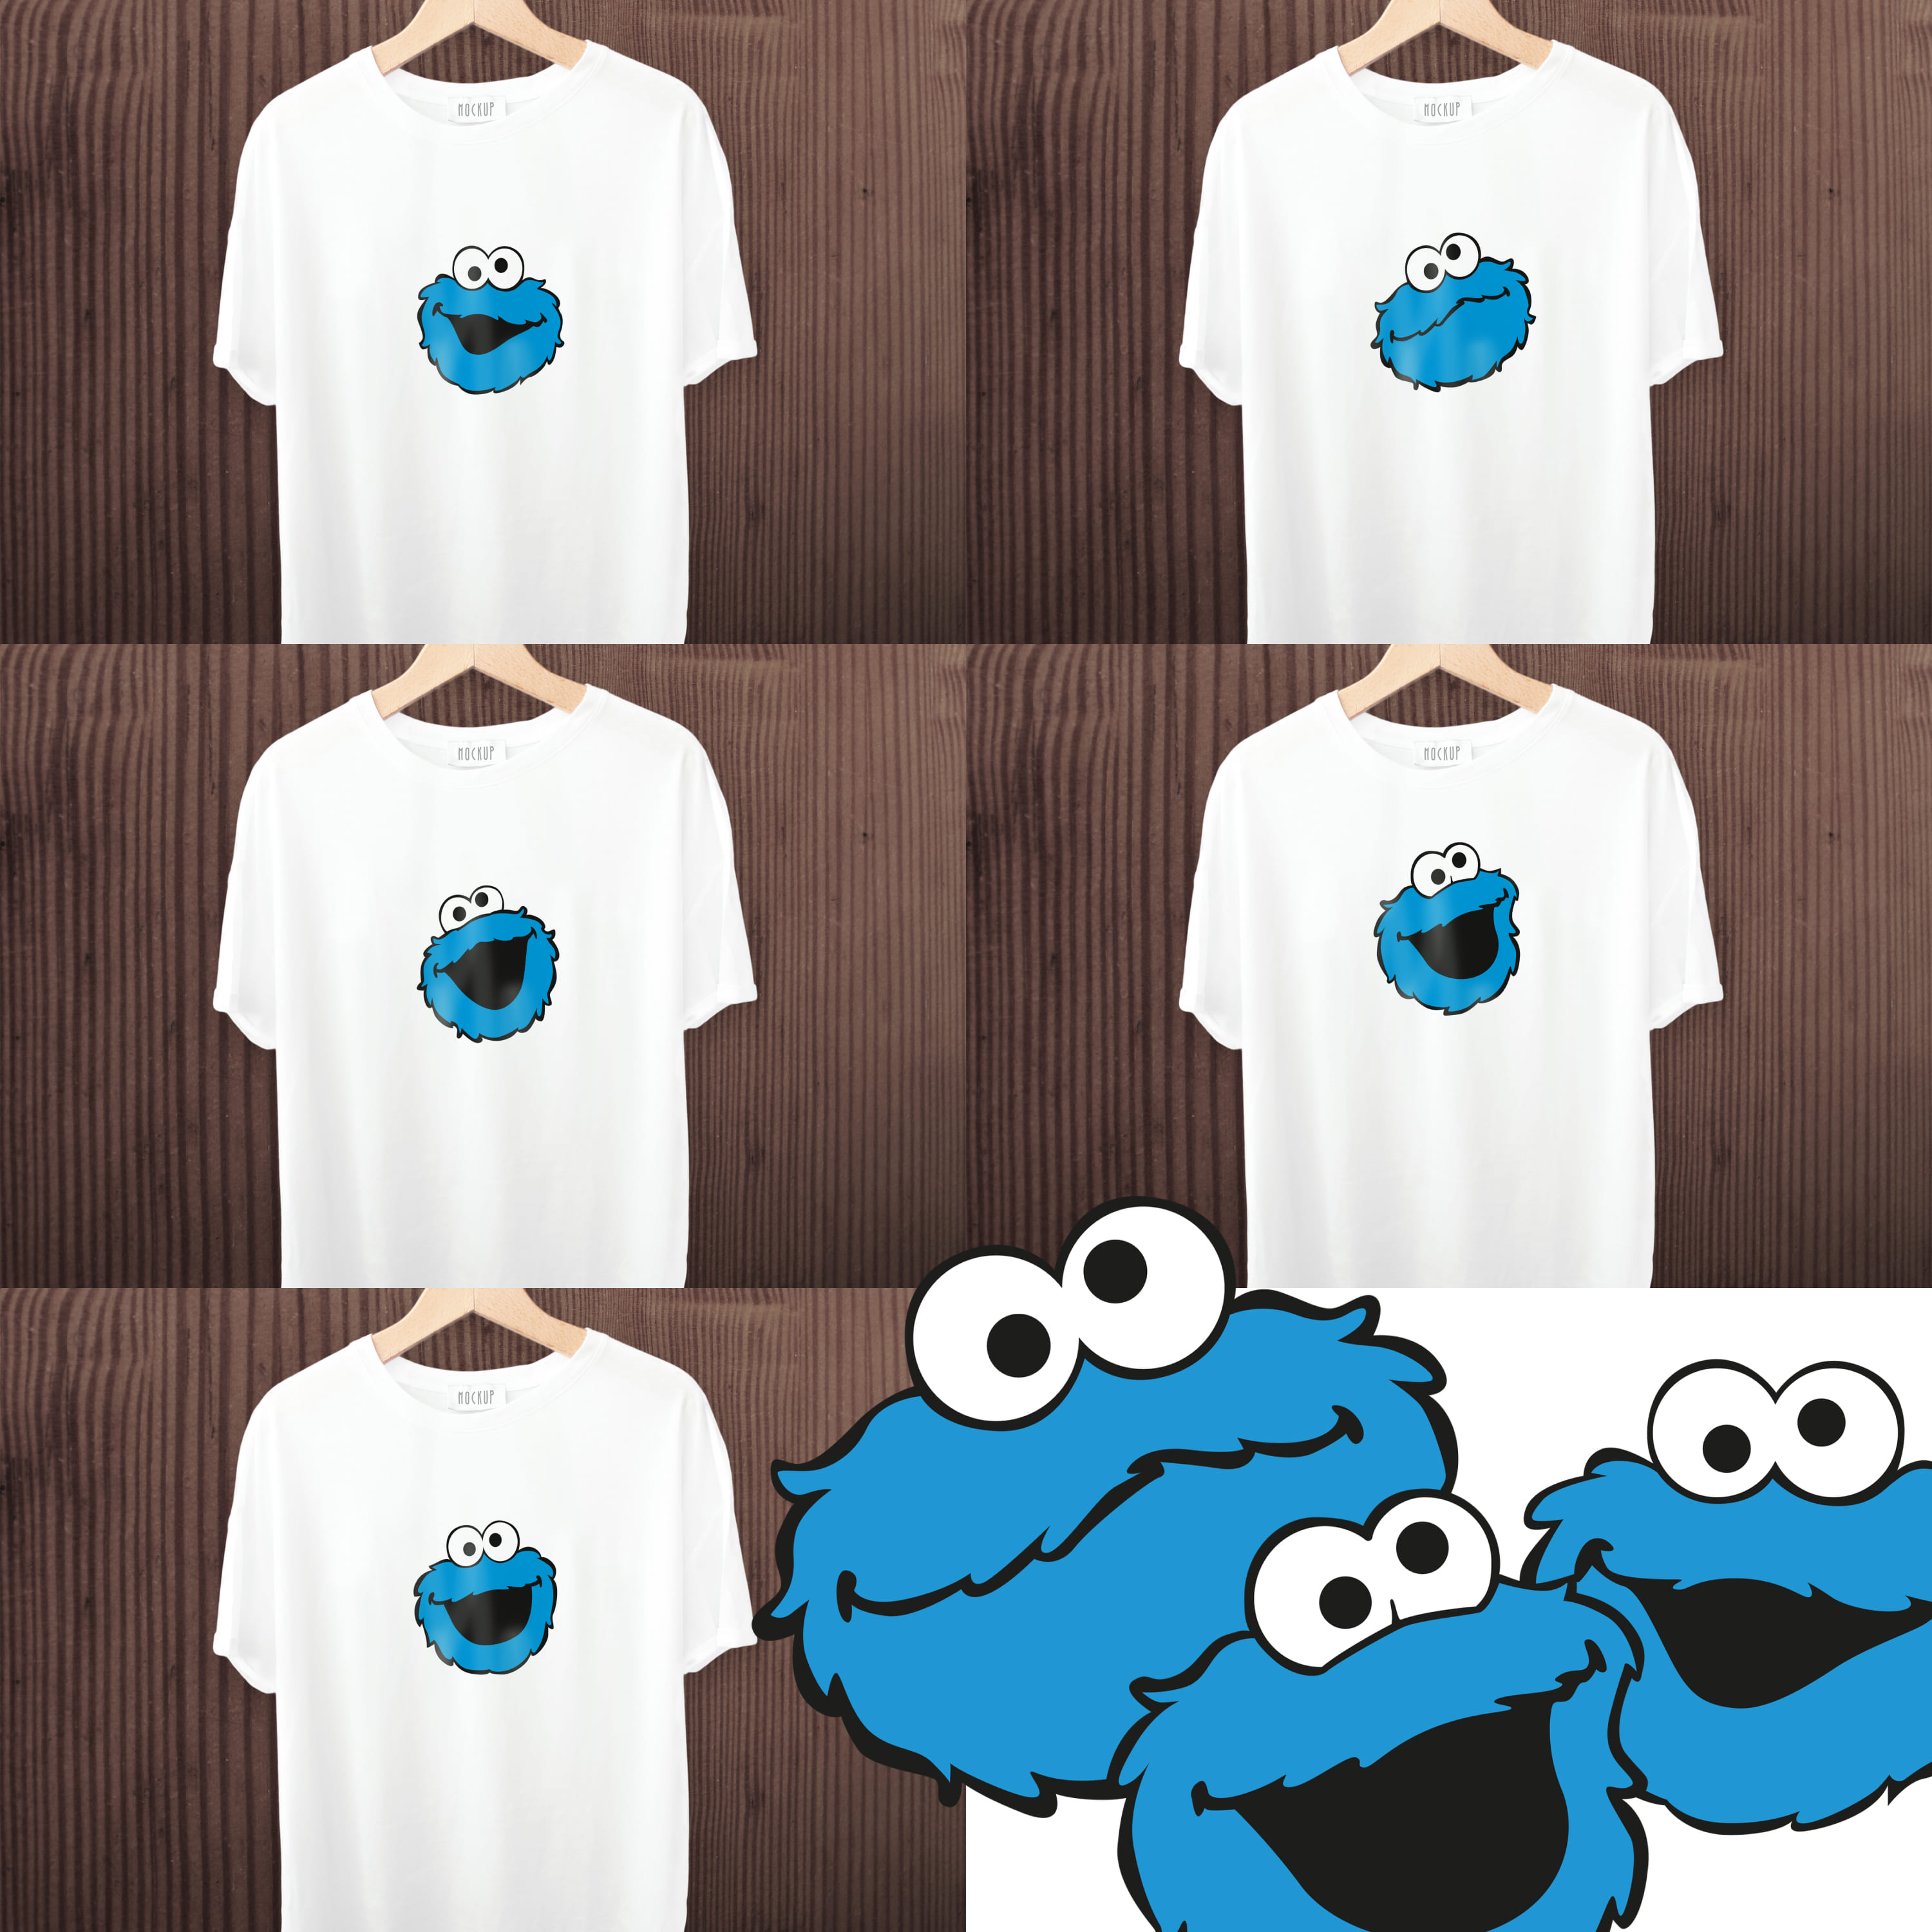 Cookie Monster Face T-shirt Designs Bundle Cover.